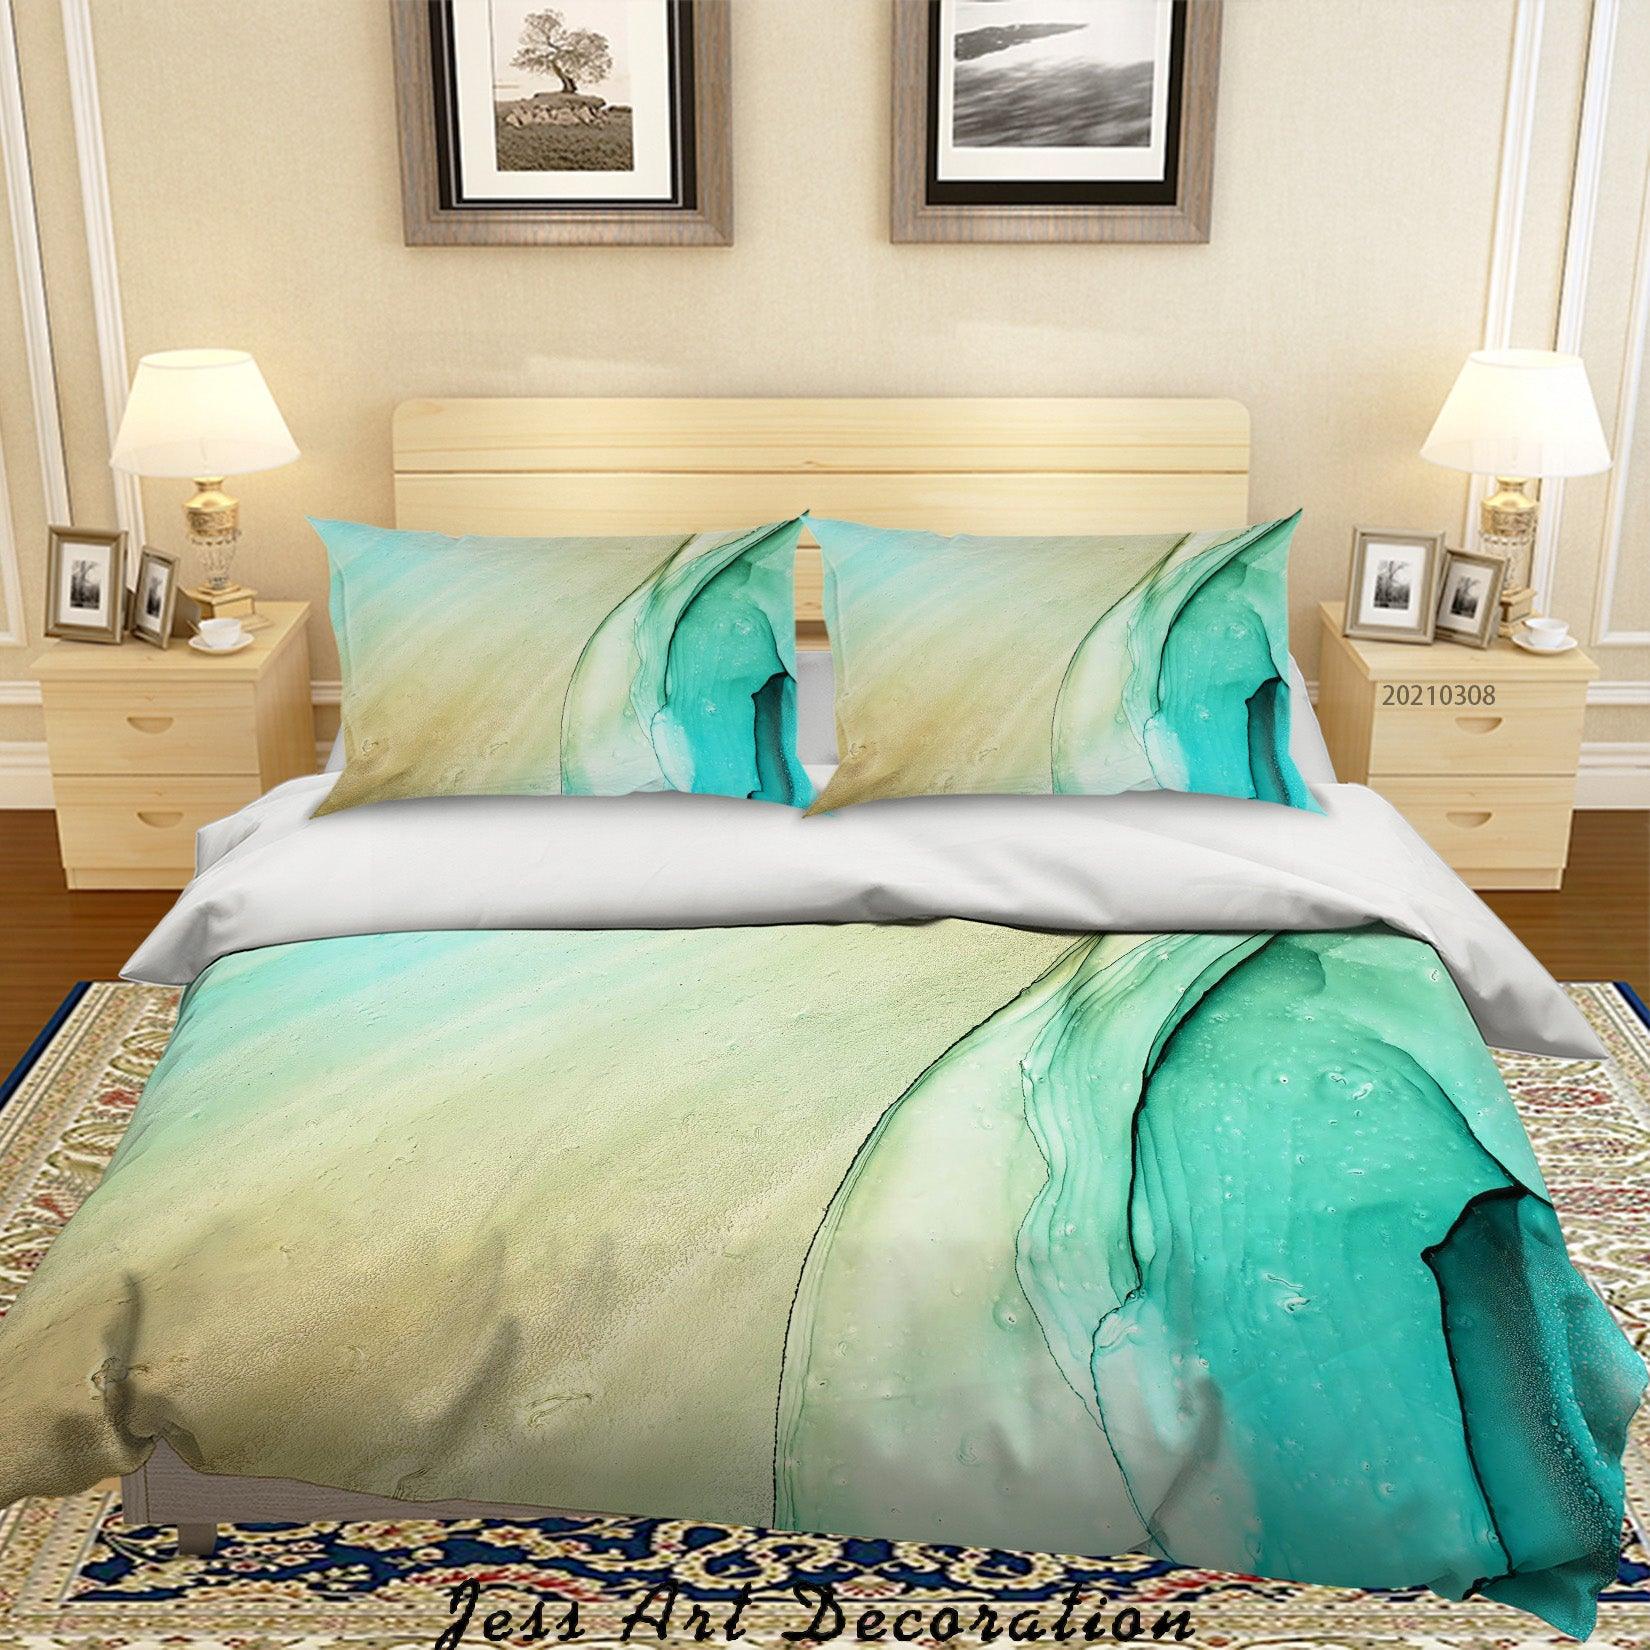 3D Watercolor Green Marble Pattern Quilt Cover Set Bedding Set Duvet Cover Pillowcases 267- Jess Art Decoration